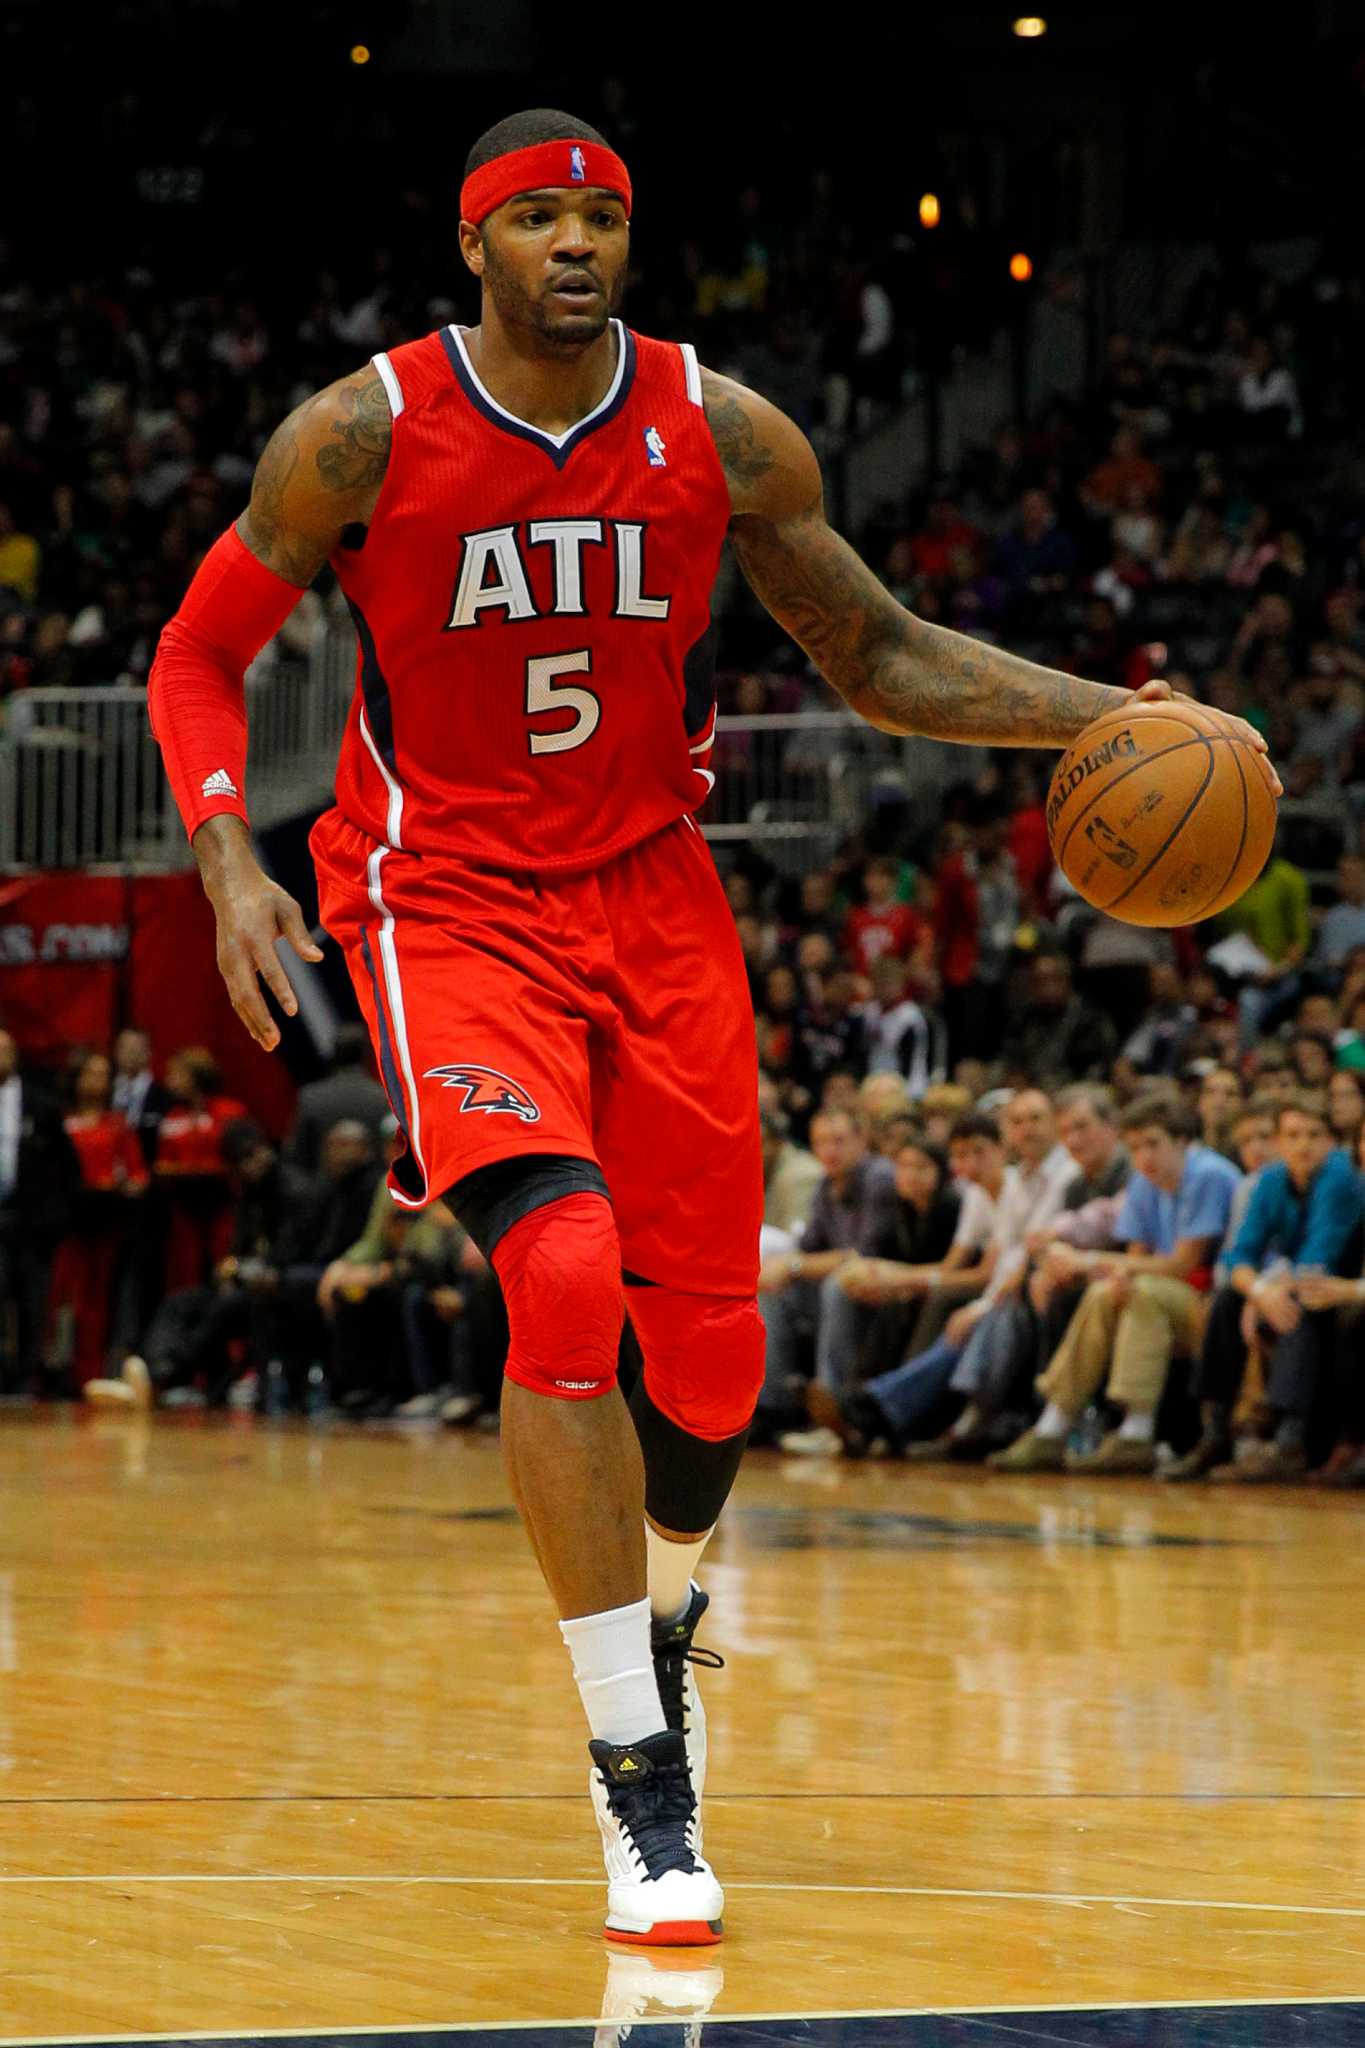 Atlanta Hawks' Josh Smith heads toward the basket during the NBA